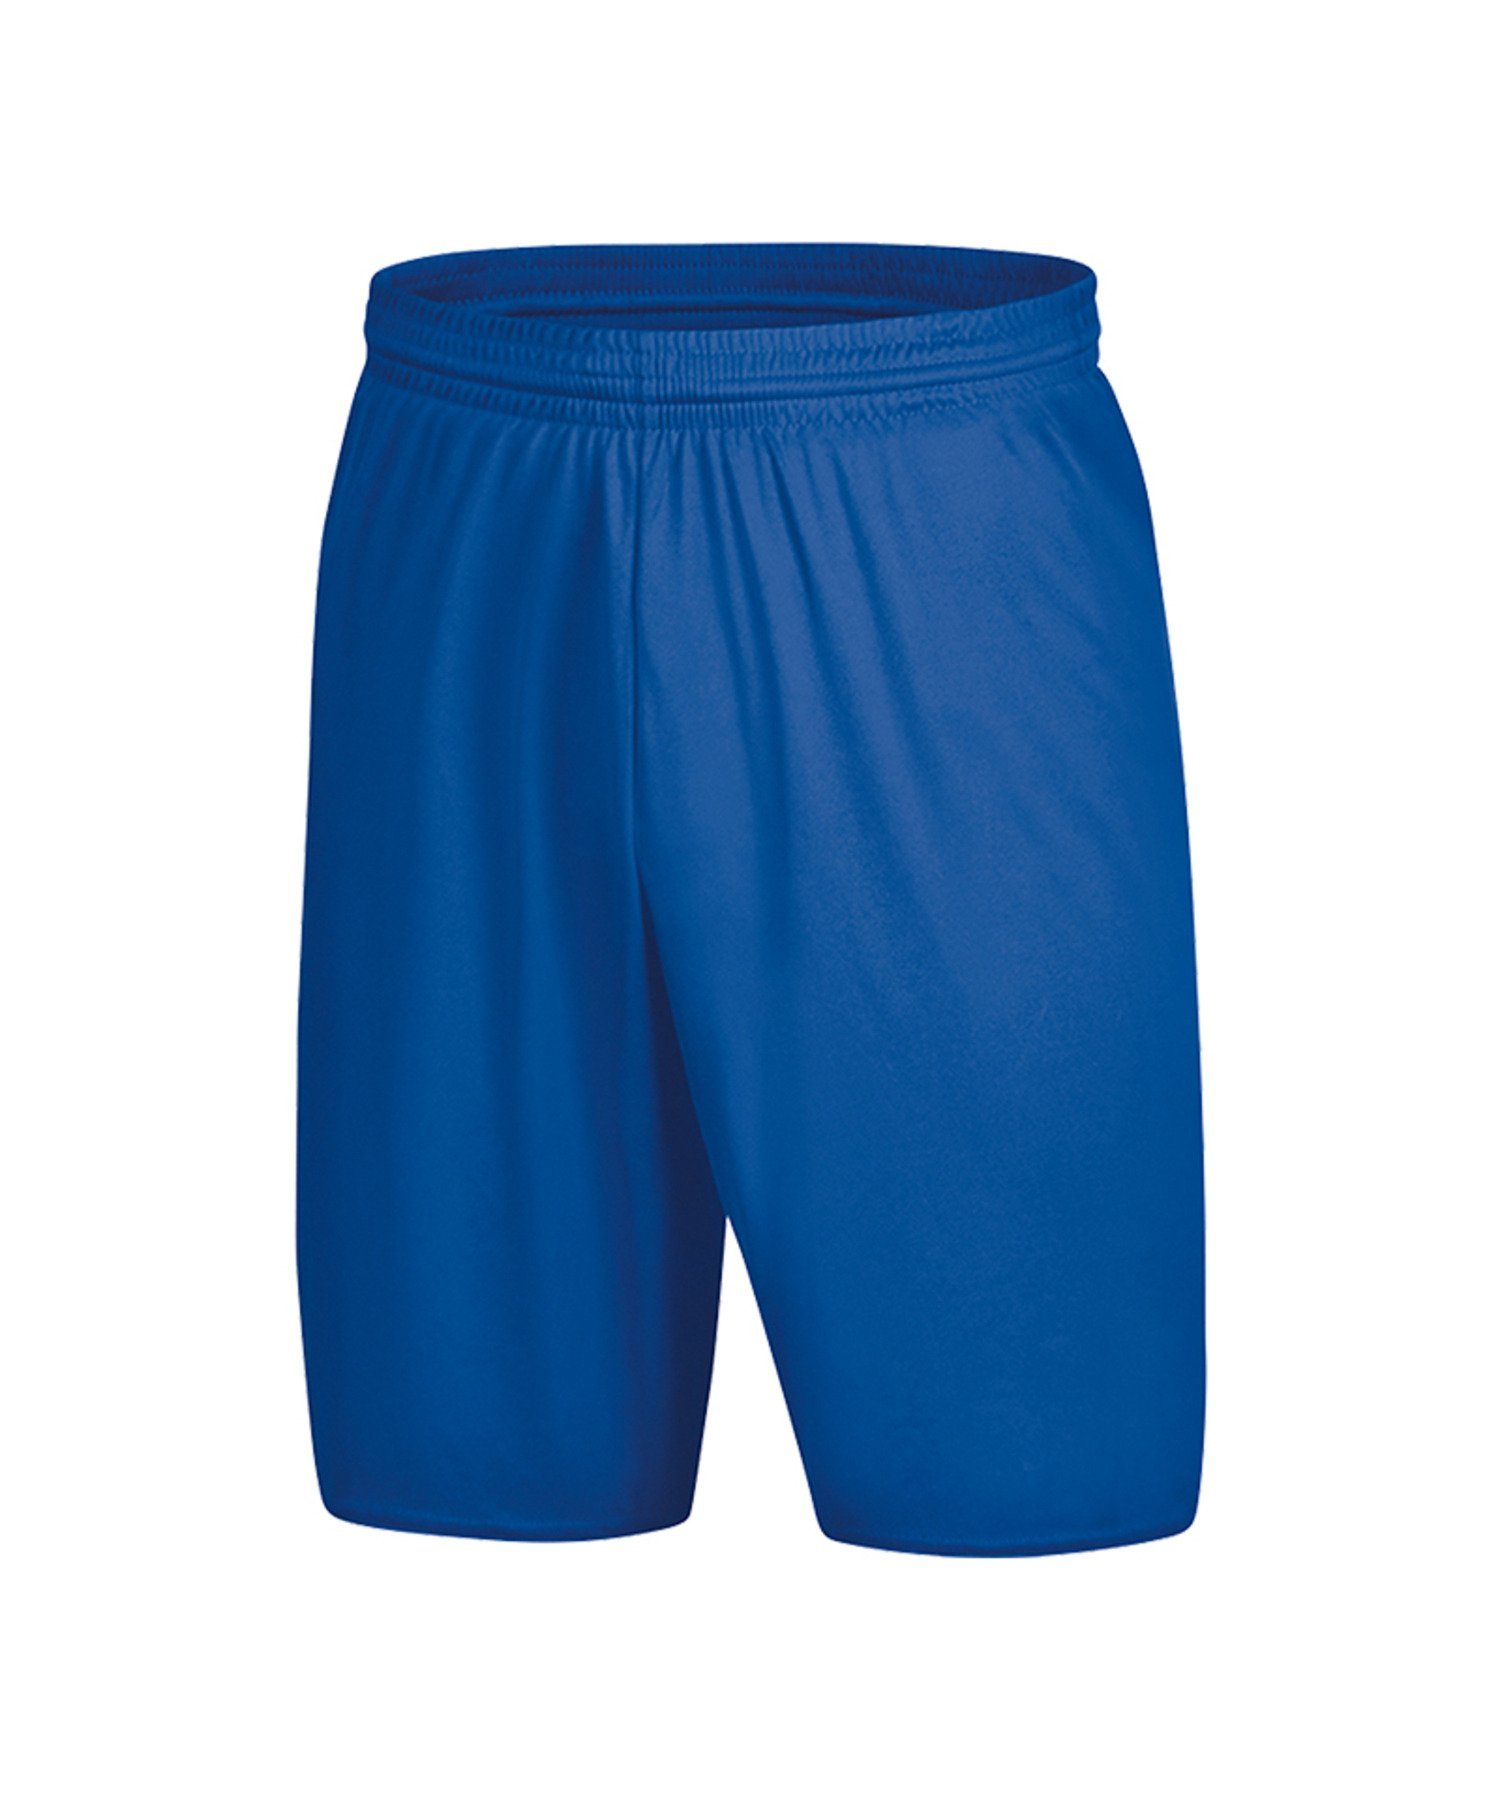 2.0 Hose Short Sporthose Blau kurz Jako Palermo